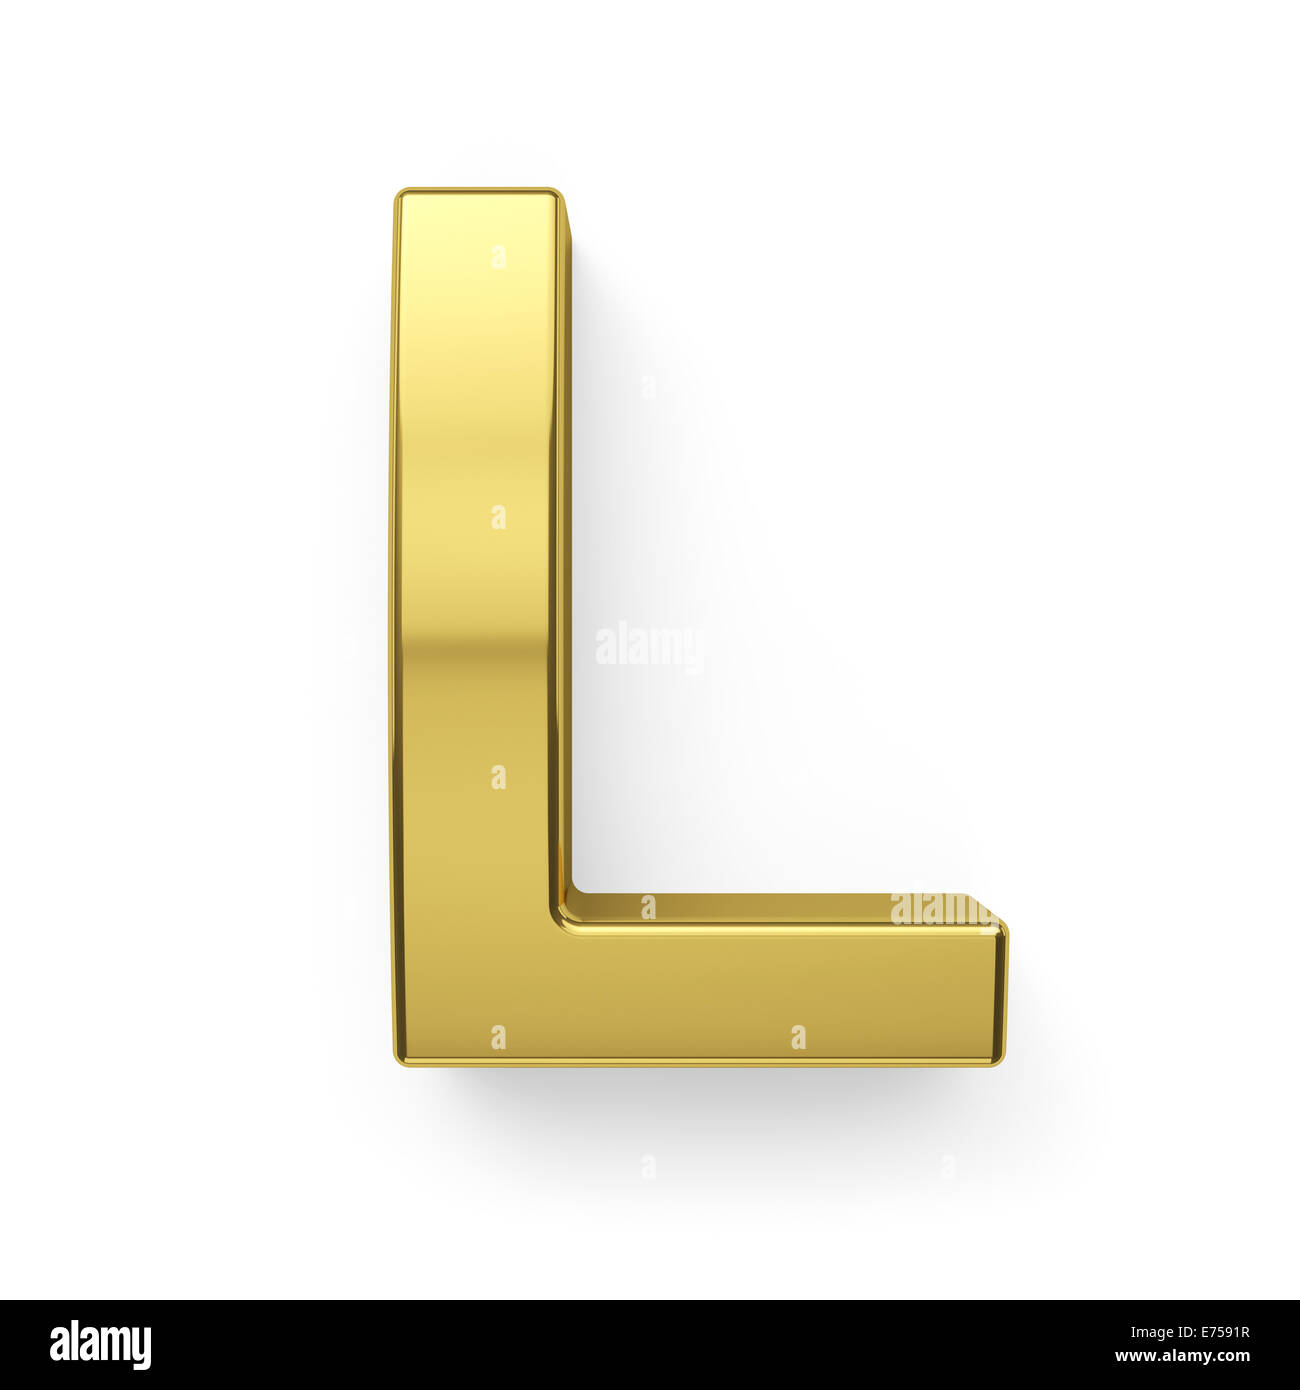 3d render of golden alphabet letter simbol - L. Isolated on white  background Stock Photo - Alamy